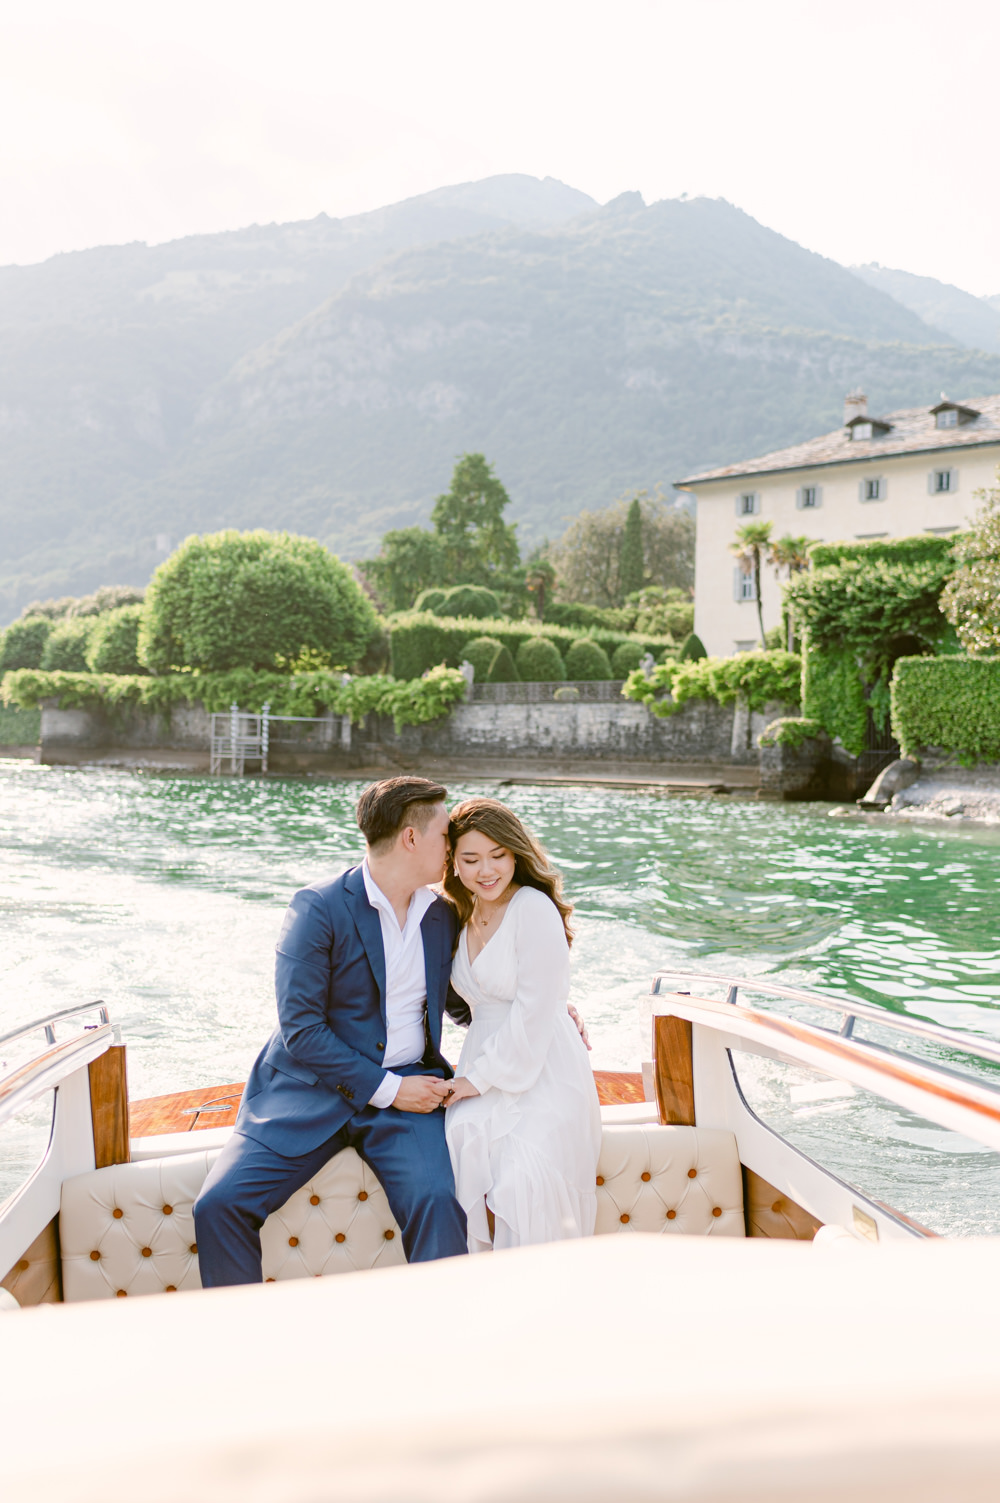 Jasmiina and Tukka rask wedding - A luxury wedding at villa Balbiano, lake  Como — Chromata Films Weddings